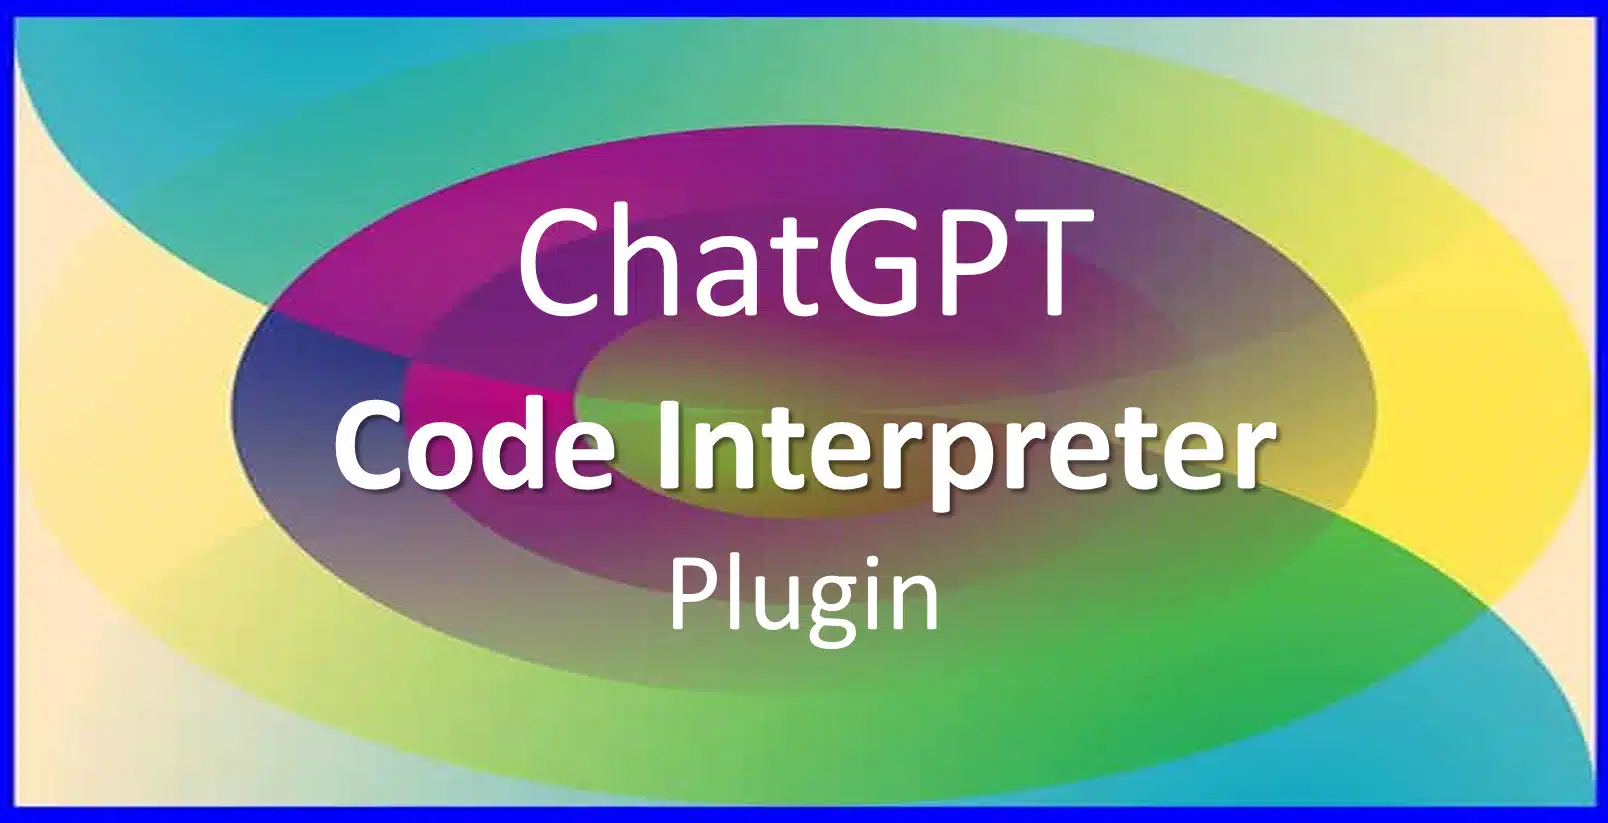 ChatGPT’s new Code Interpreter